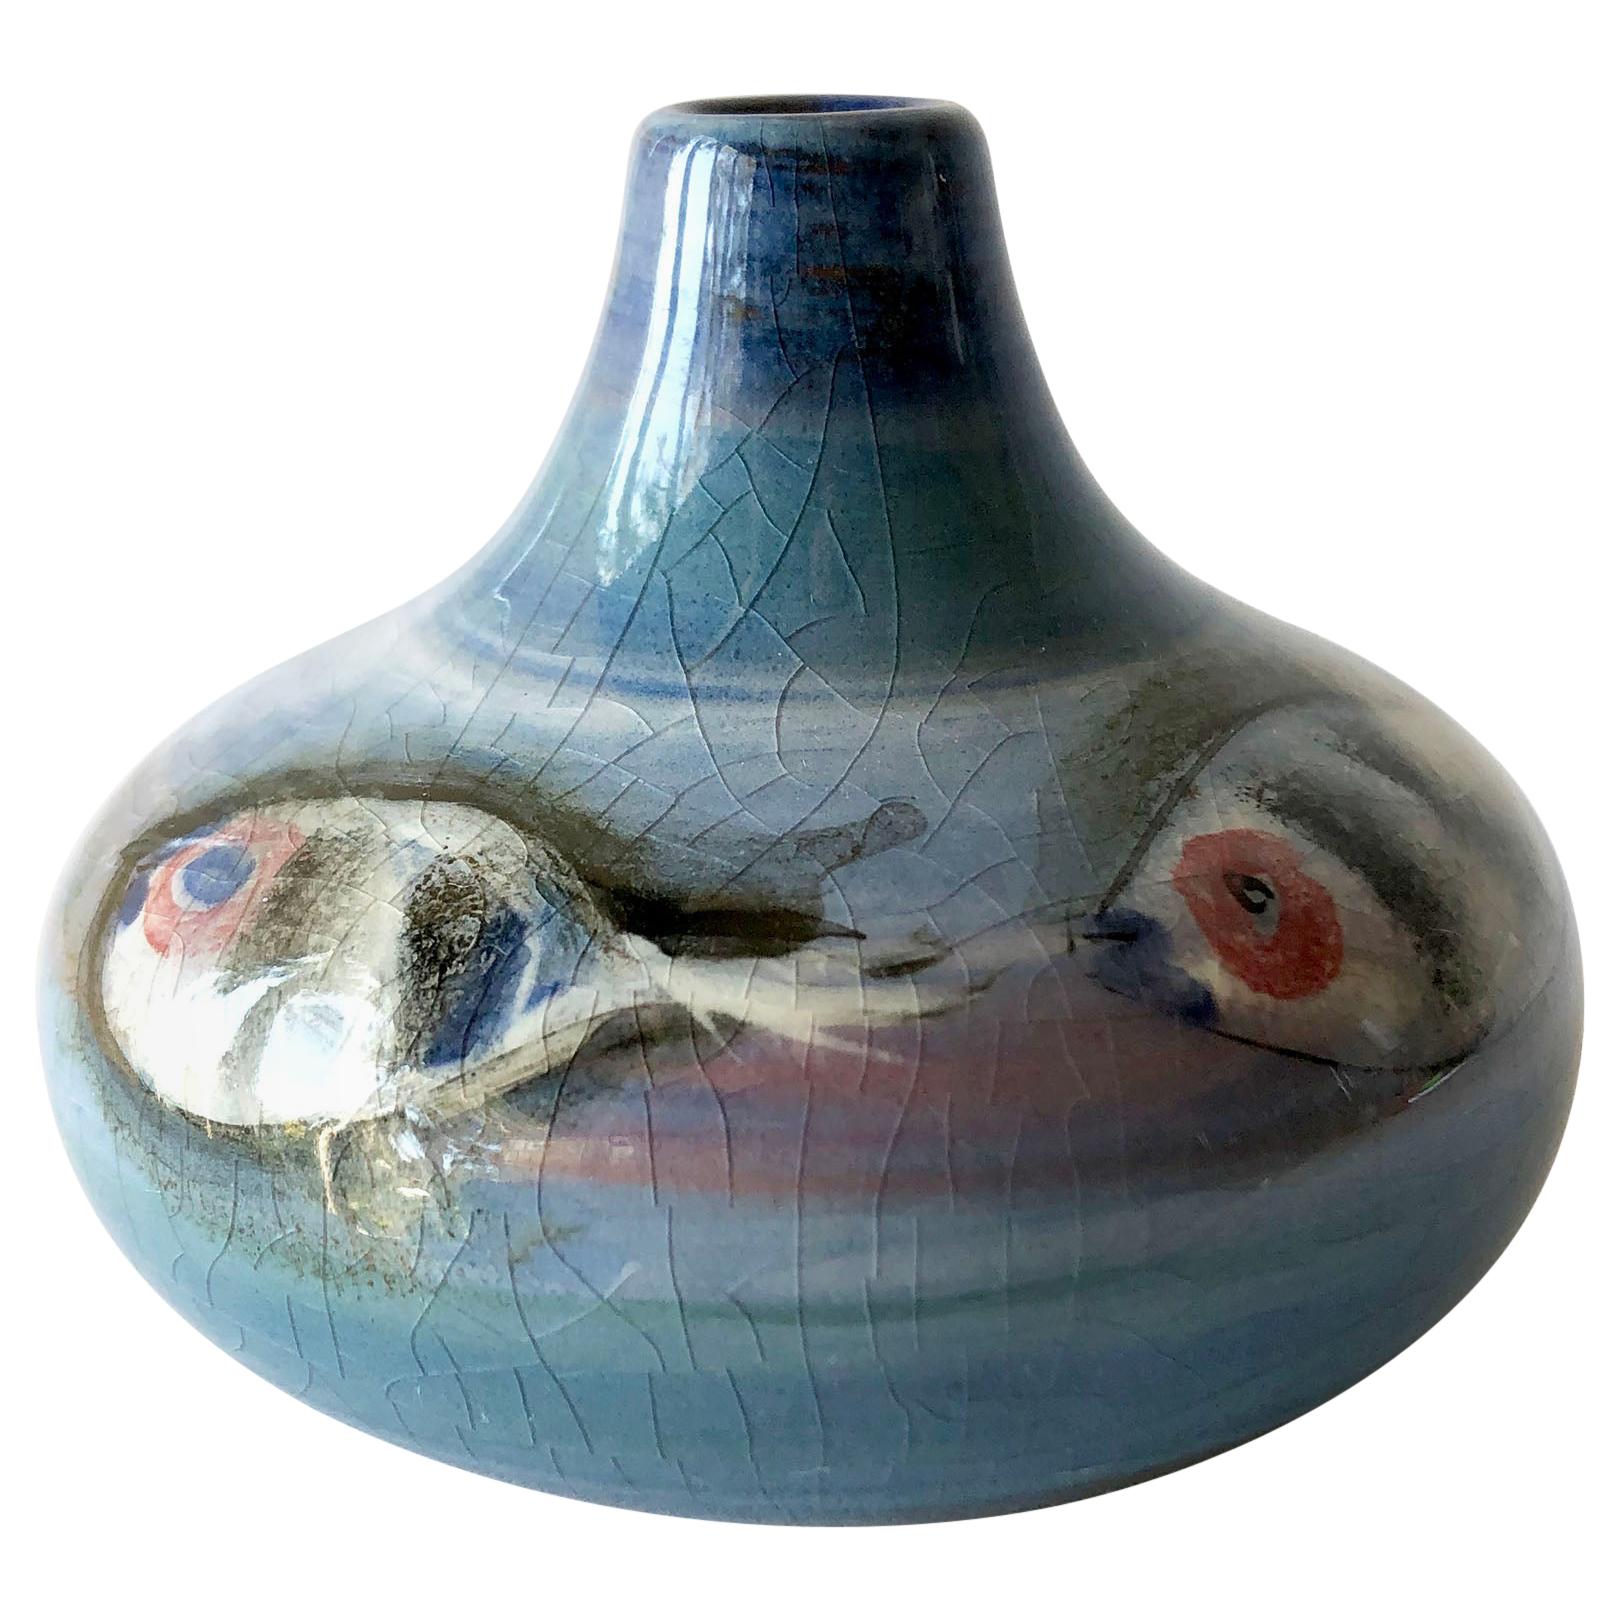 California studio pottery bud vase created by Polia Pillin, circa 1960's. Vase measures 3